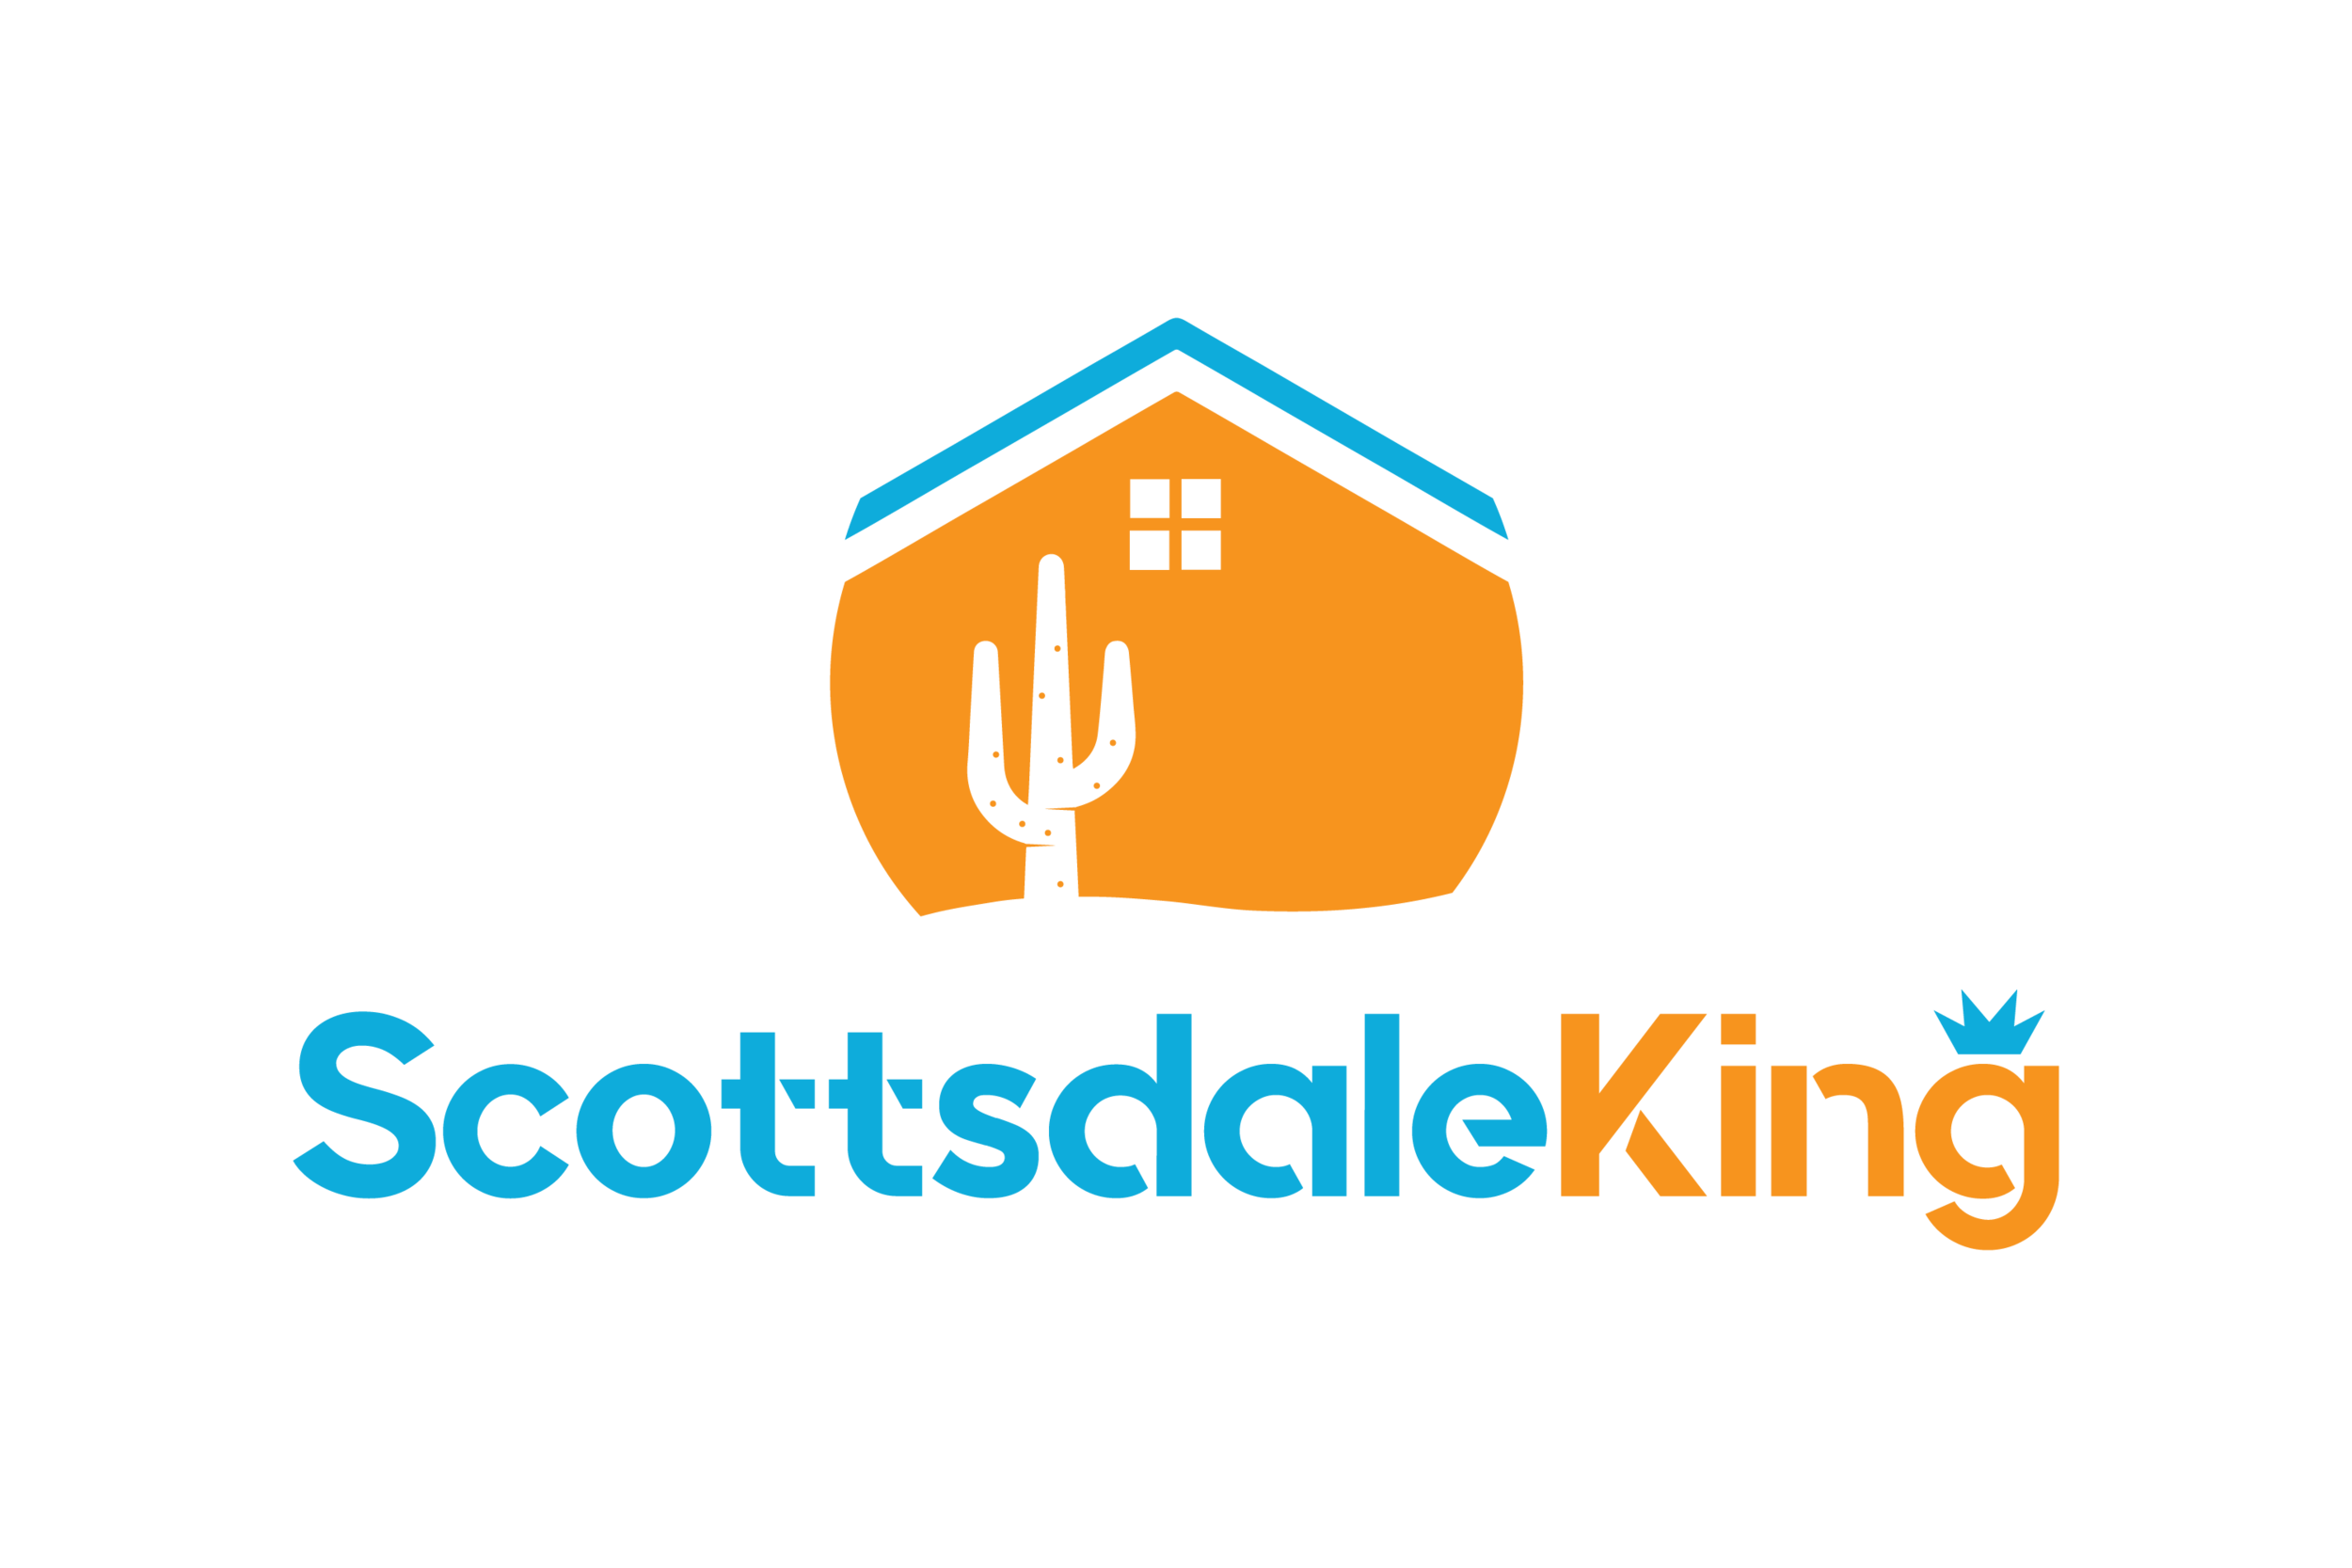 Scottsdale King